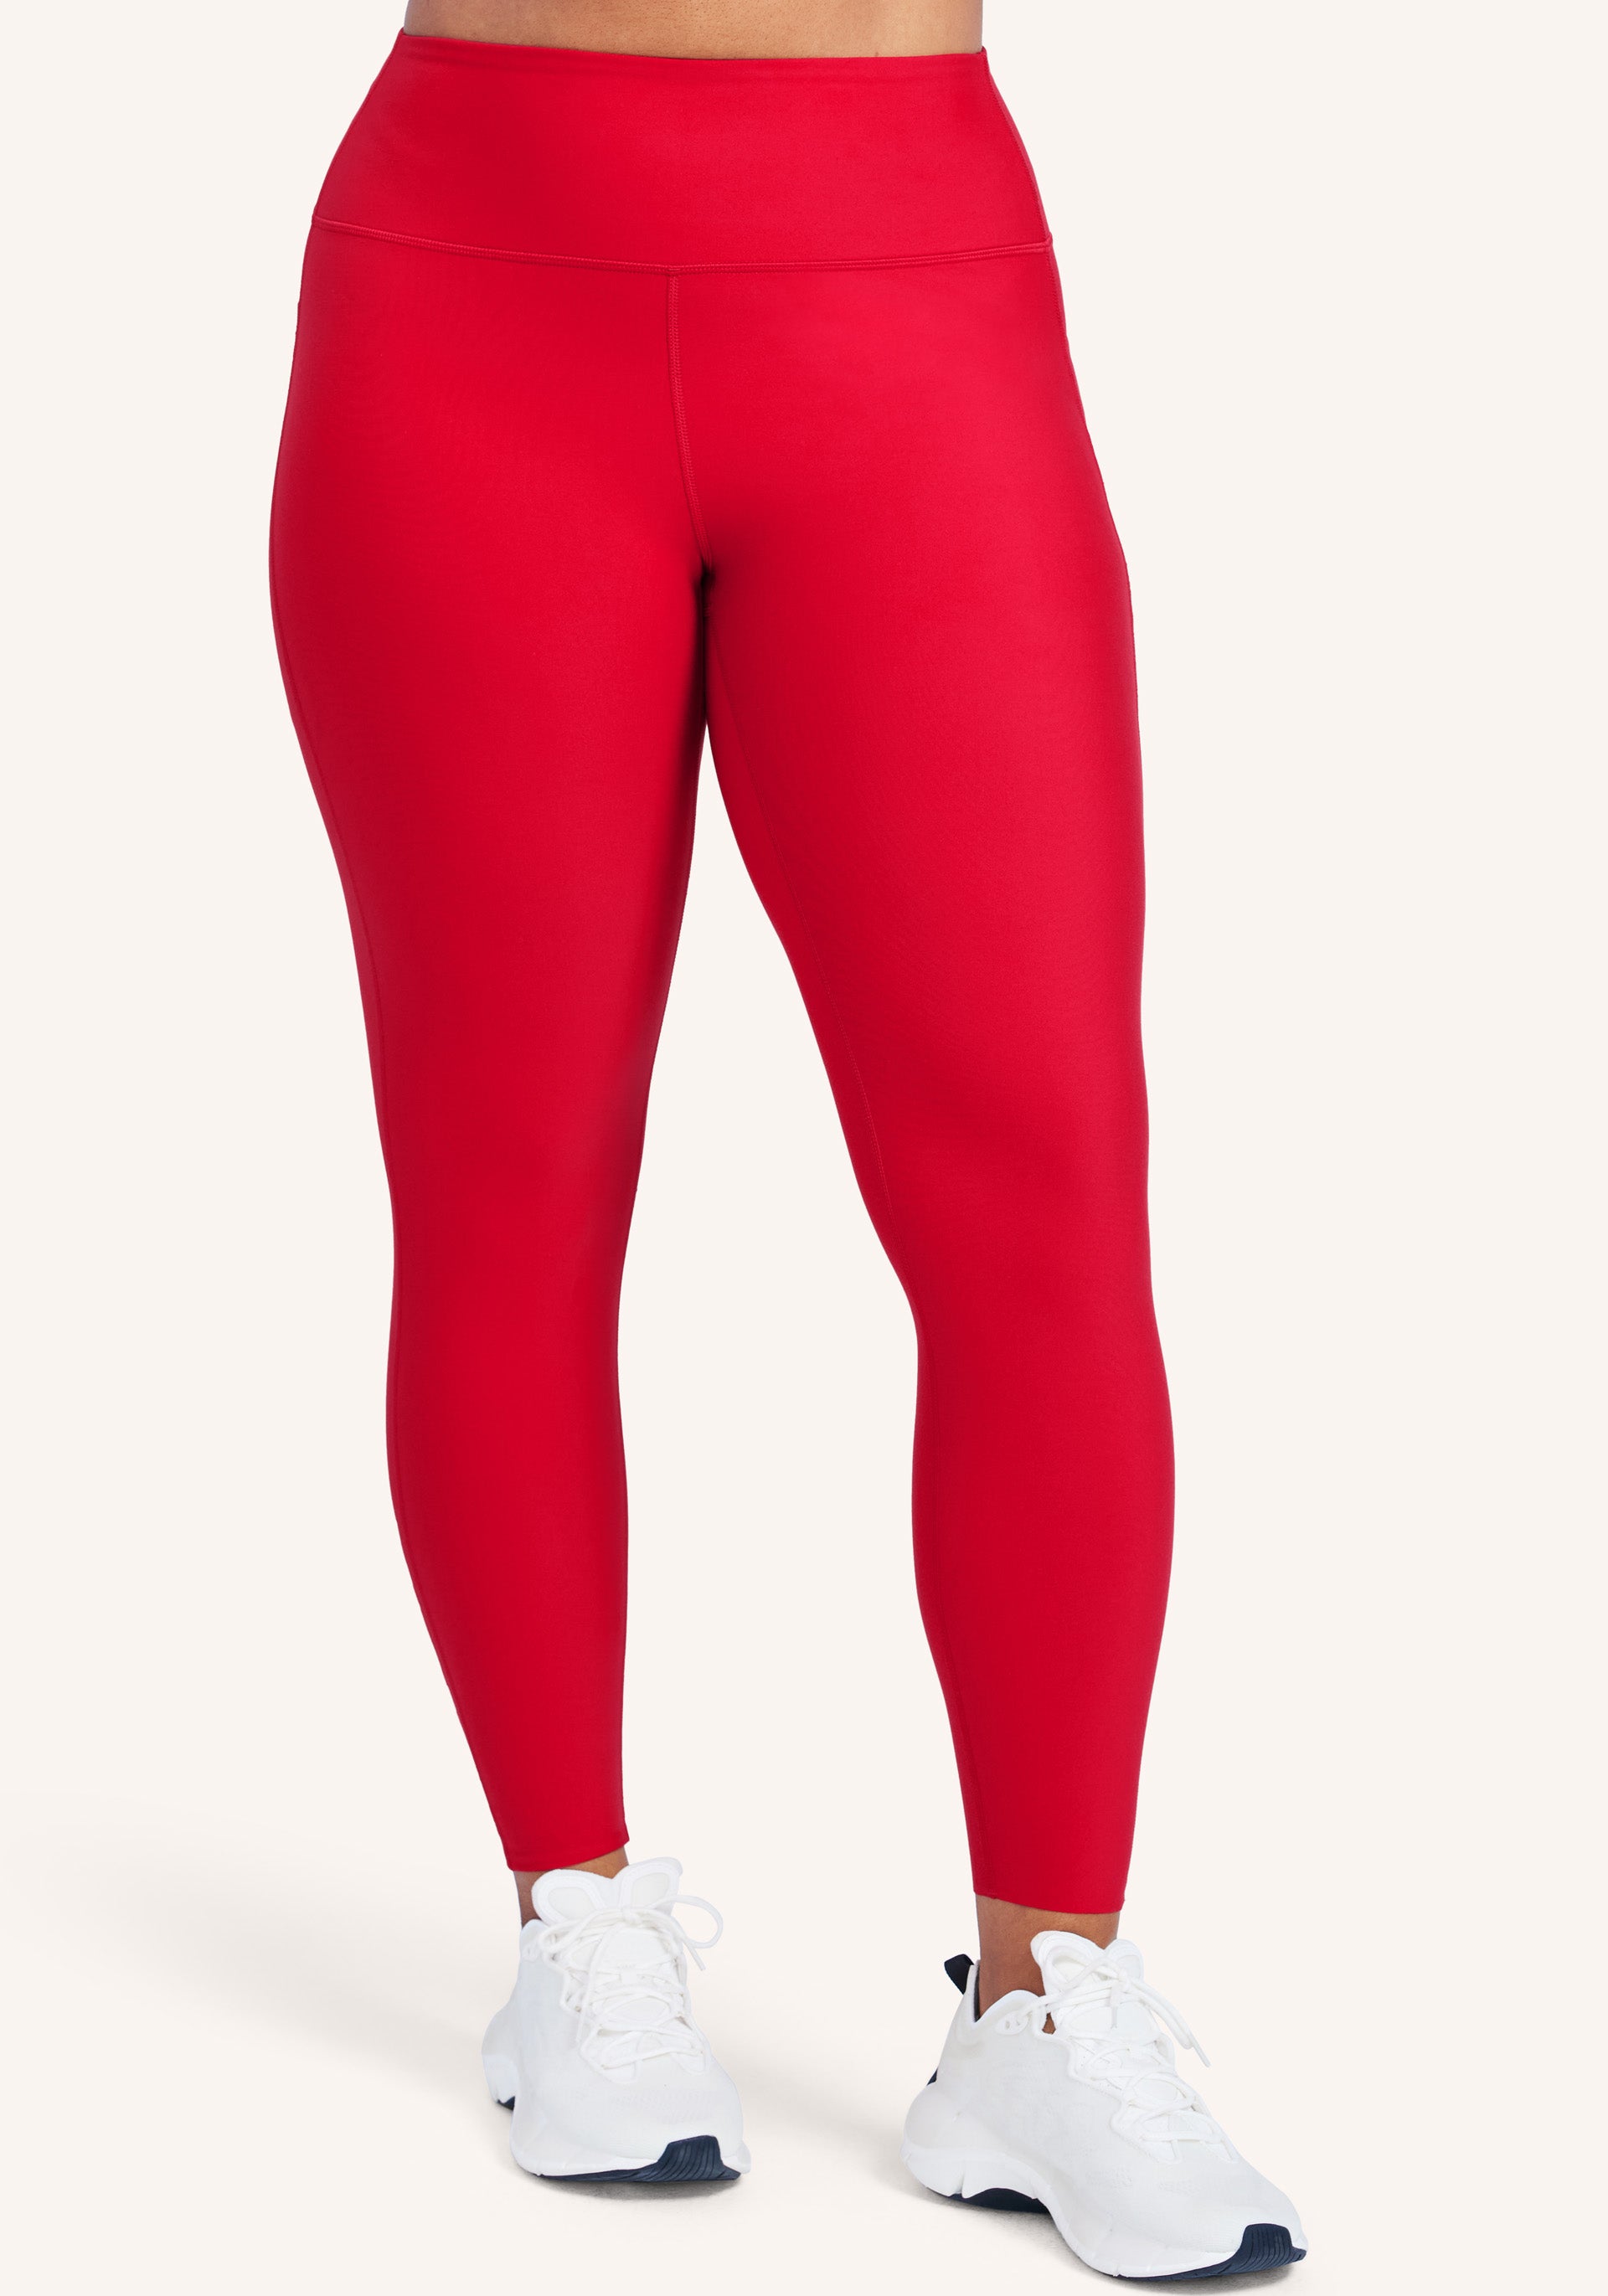 Alpine High Waist Leggings - Red - Clothing